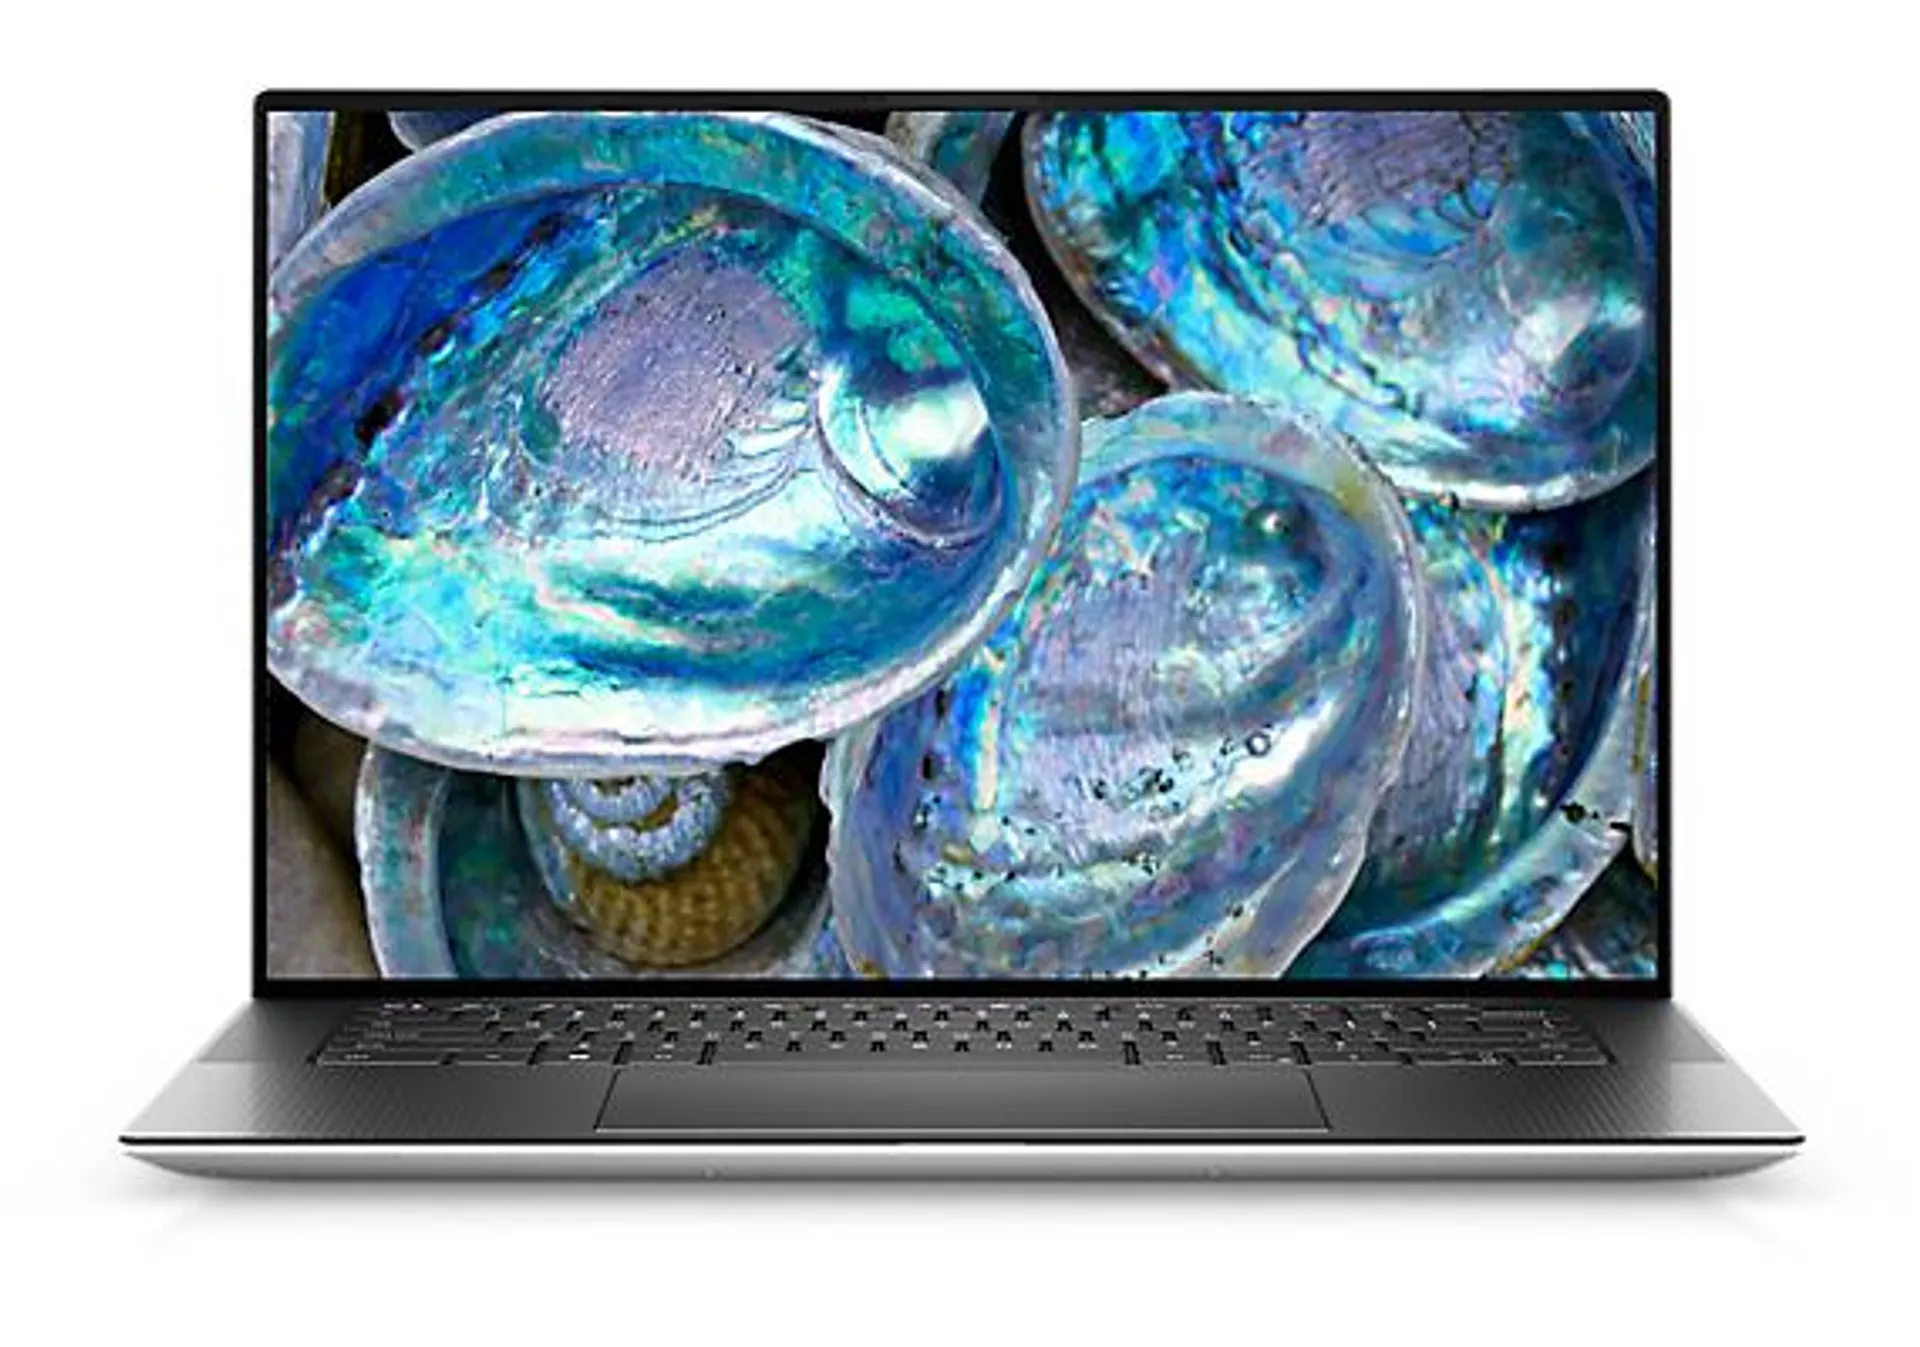 New XPS 15 Laptop